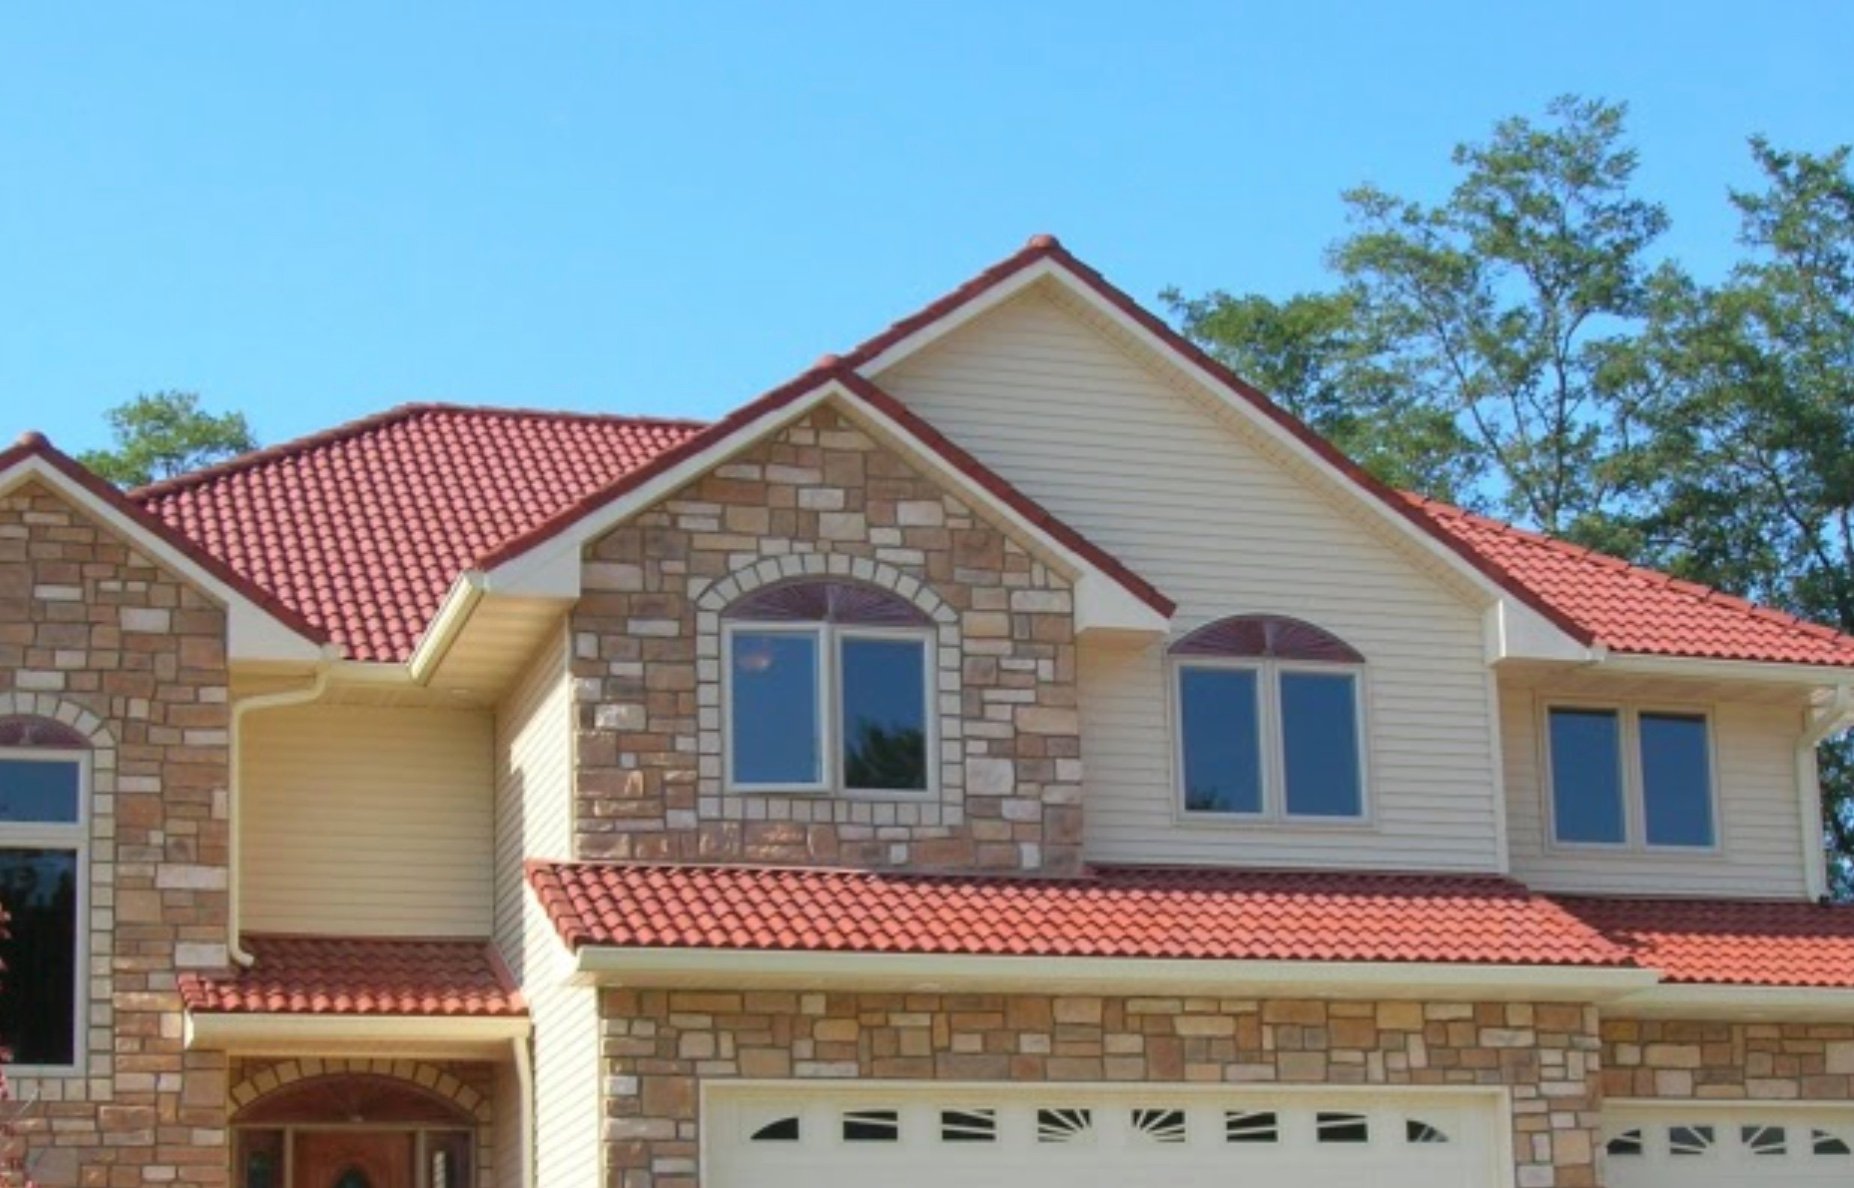 7 Home Designs Using an Orange Tile Roof Brava Roof Tile